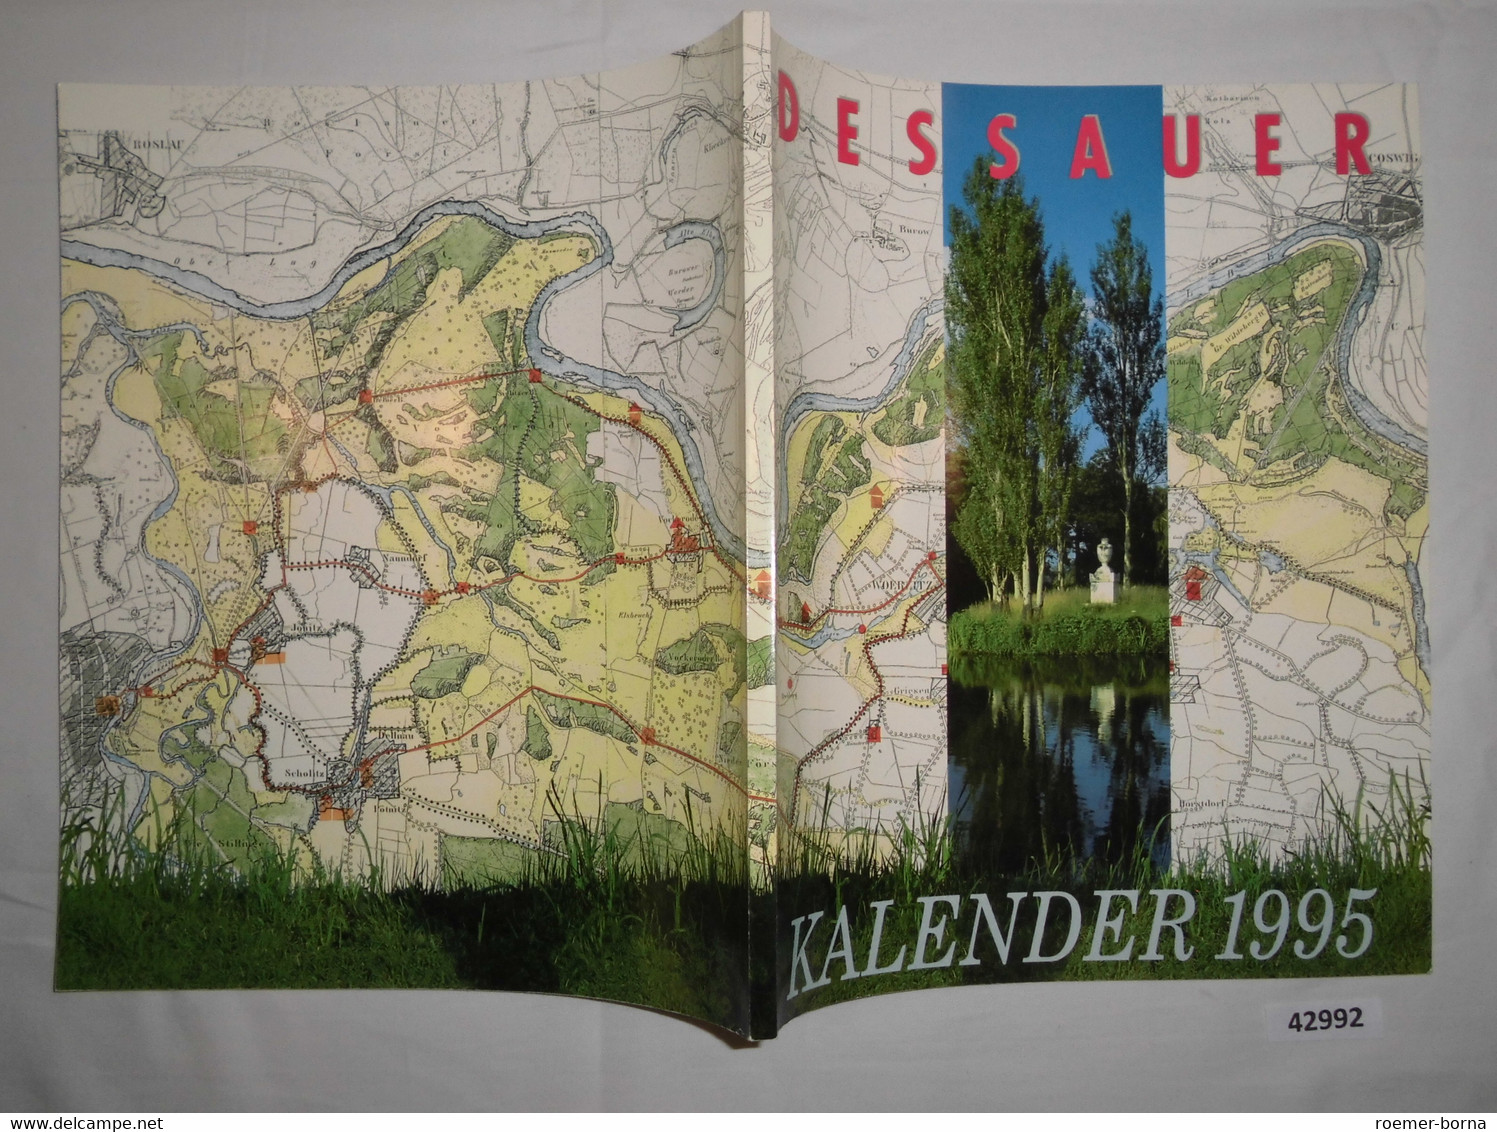 Dessauer Kalender 1995 (39. Jahrgang) - Kalenders